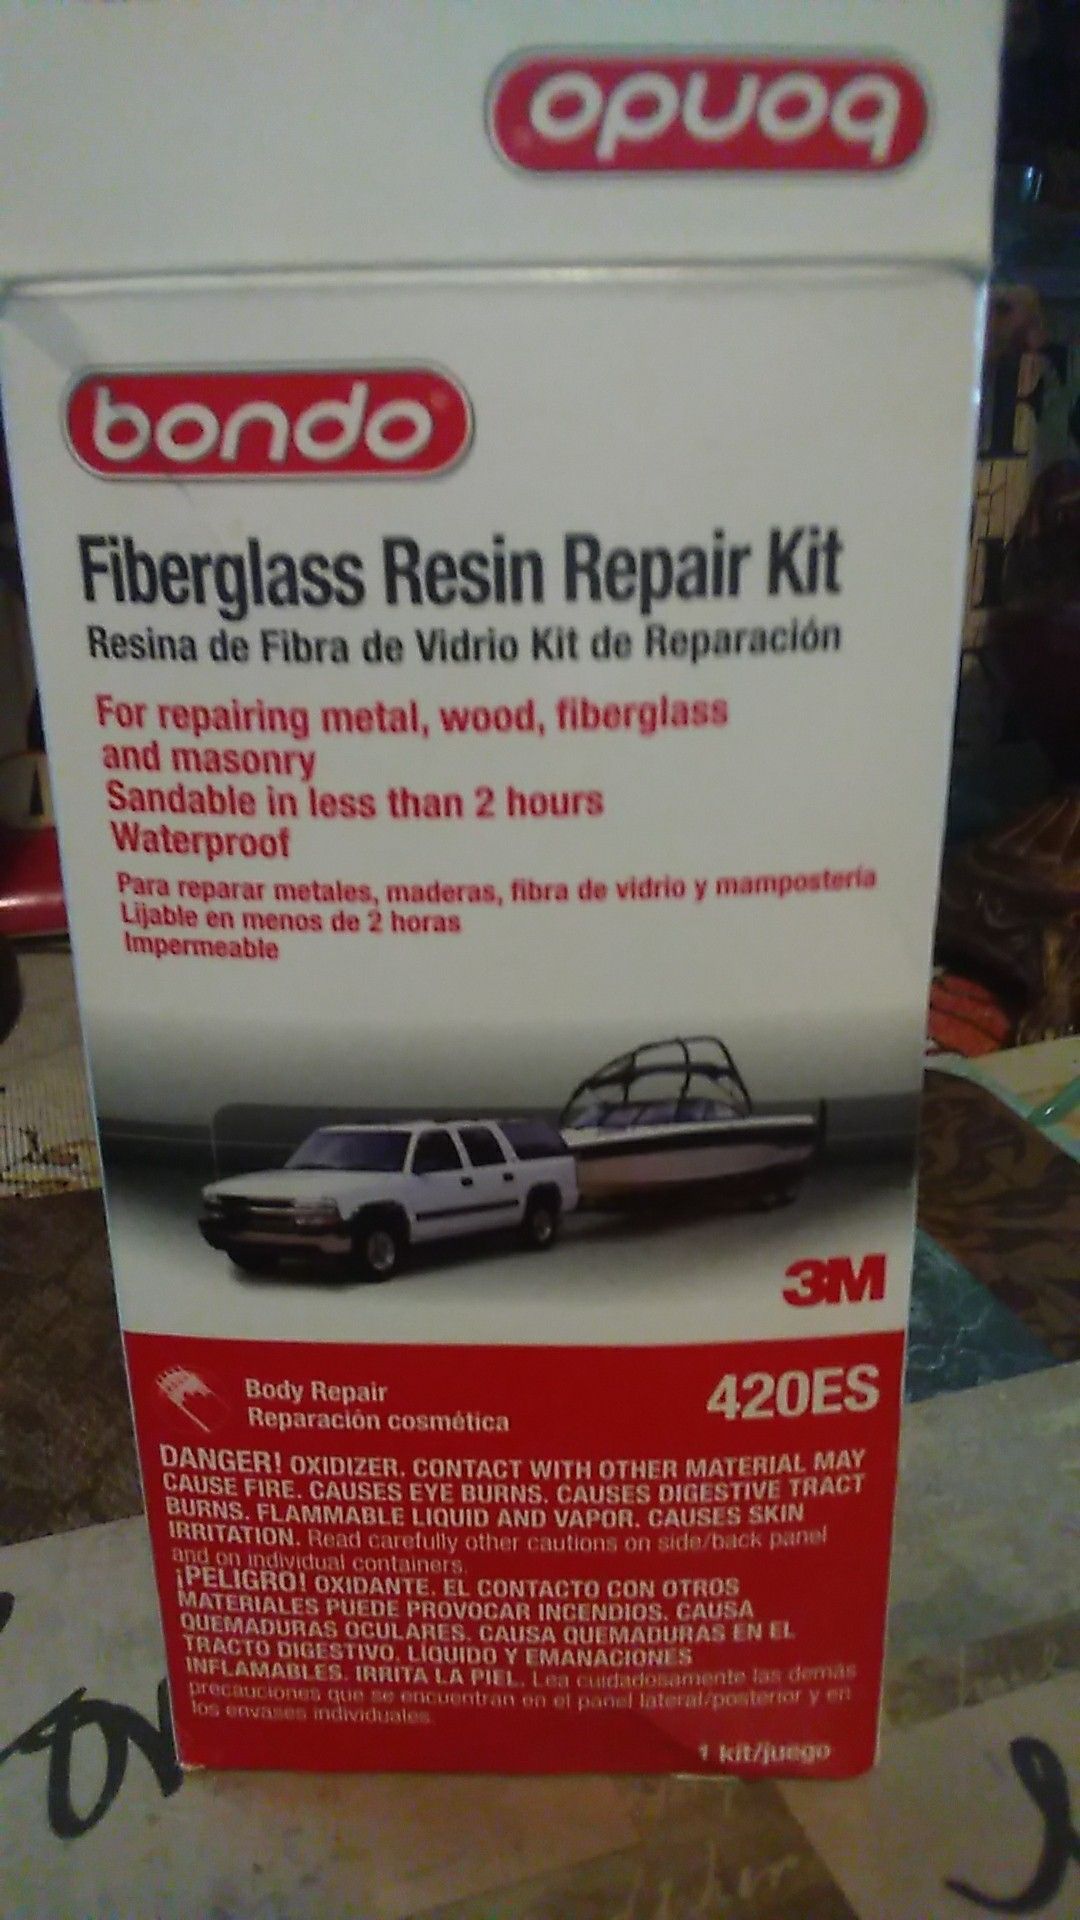 BONDO fiberglass resin repair kit, brand new in box never been used